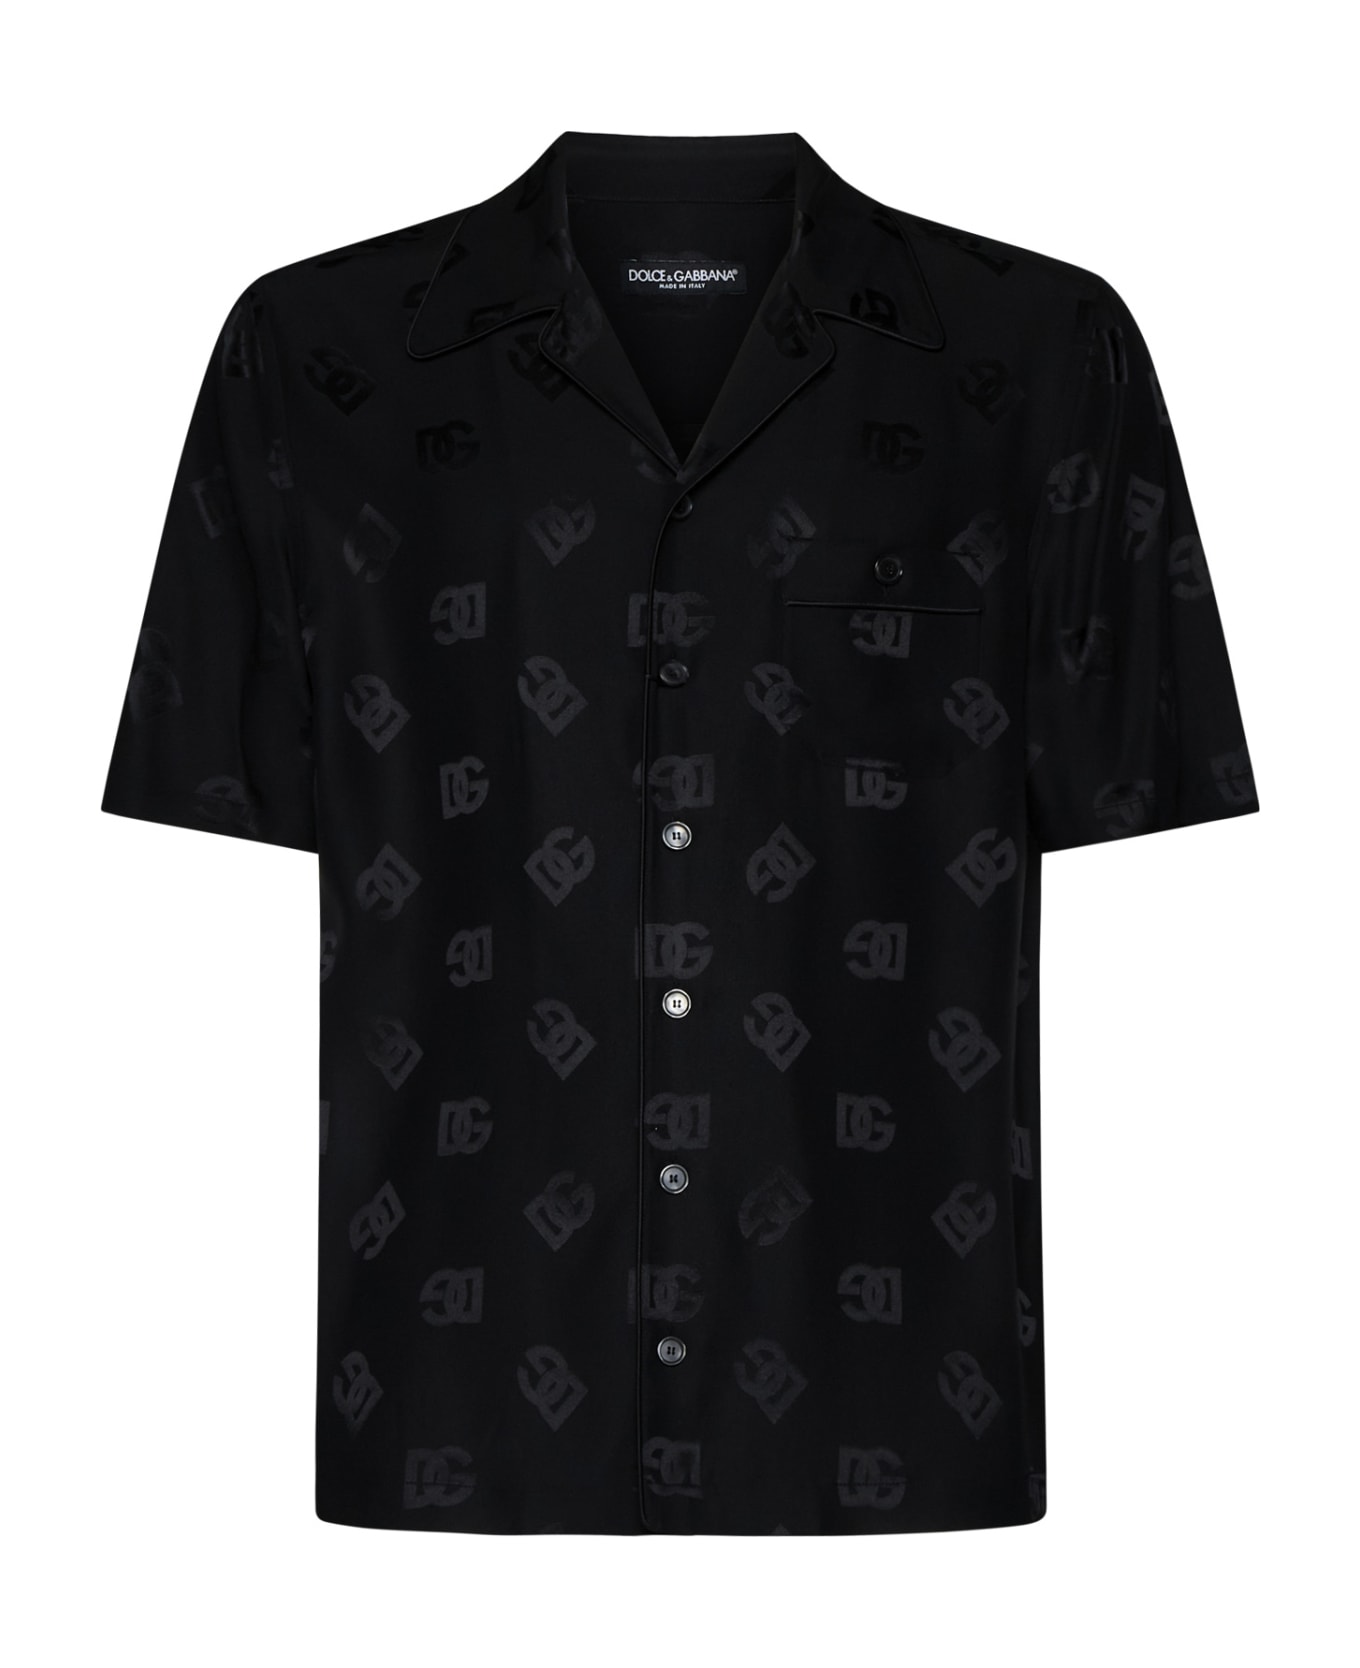 Dolce & Gabbana Silk Jacquard Shirt With Dg Monogram Print - Nero